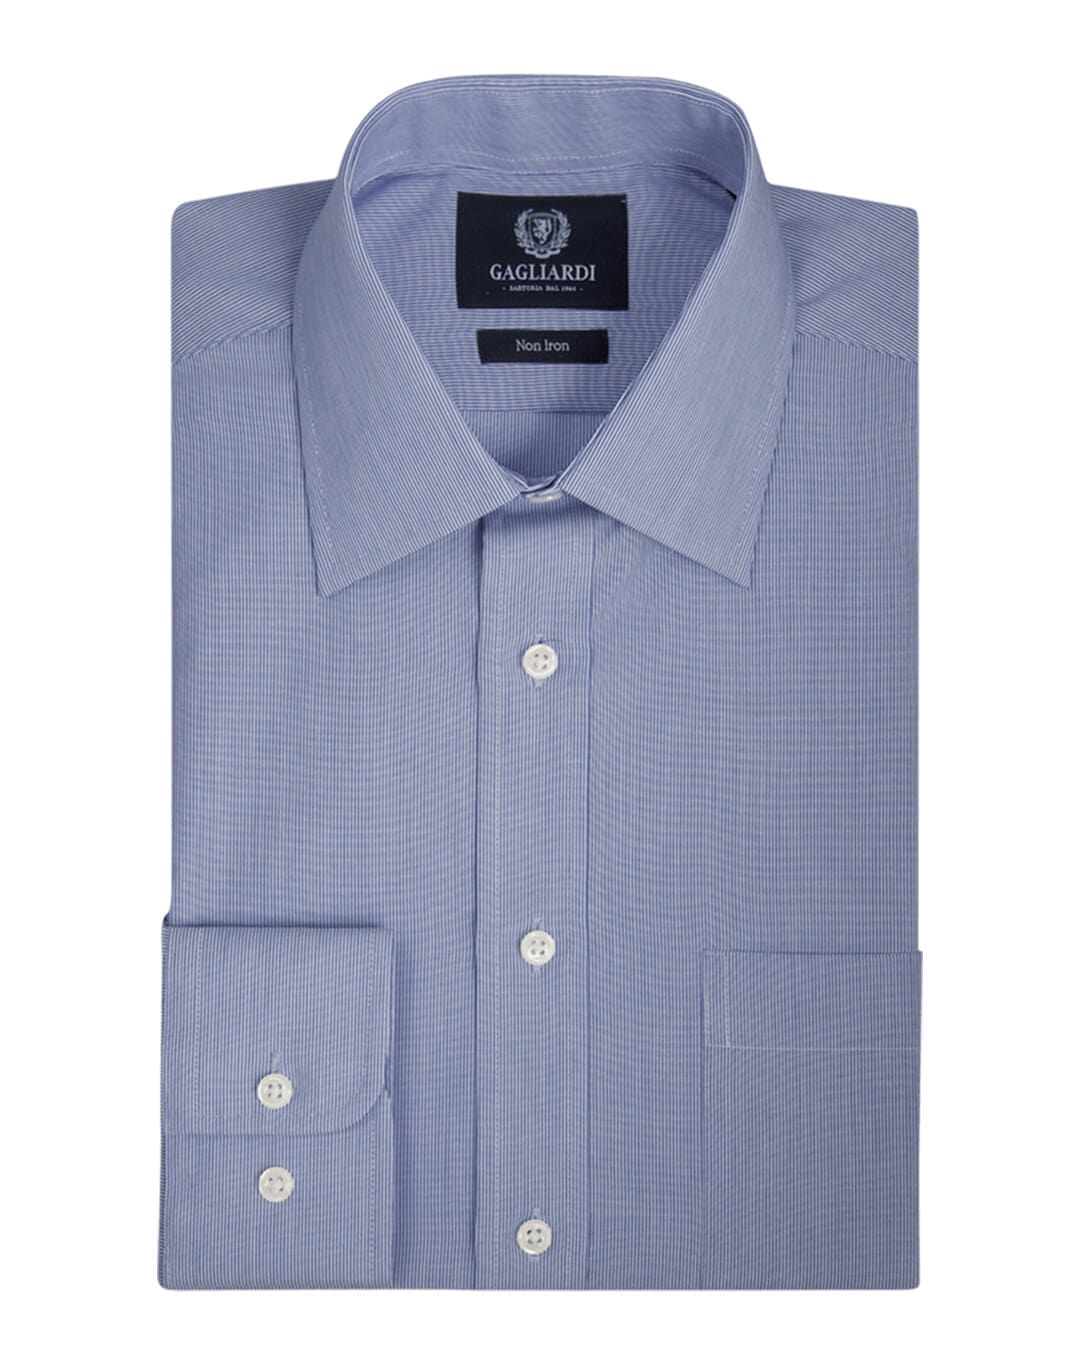 Gagliardi Shirts Gagliardi Royal Blue Fine Striped Tailored Fit Classic Collar Shirt